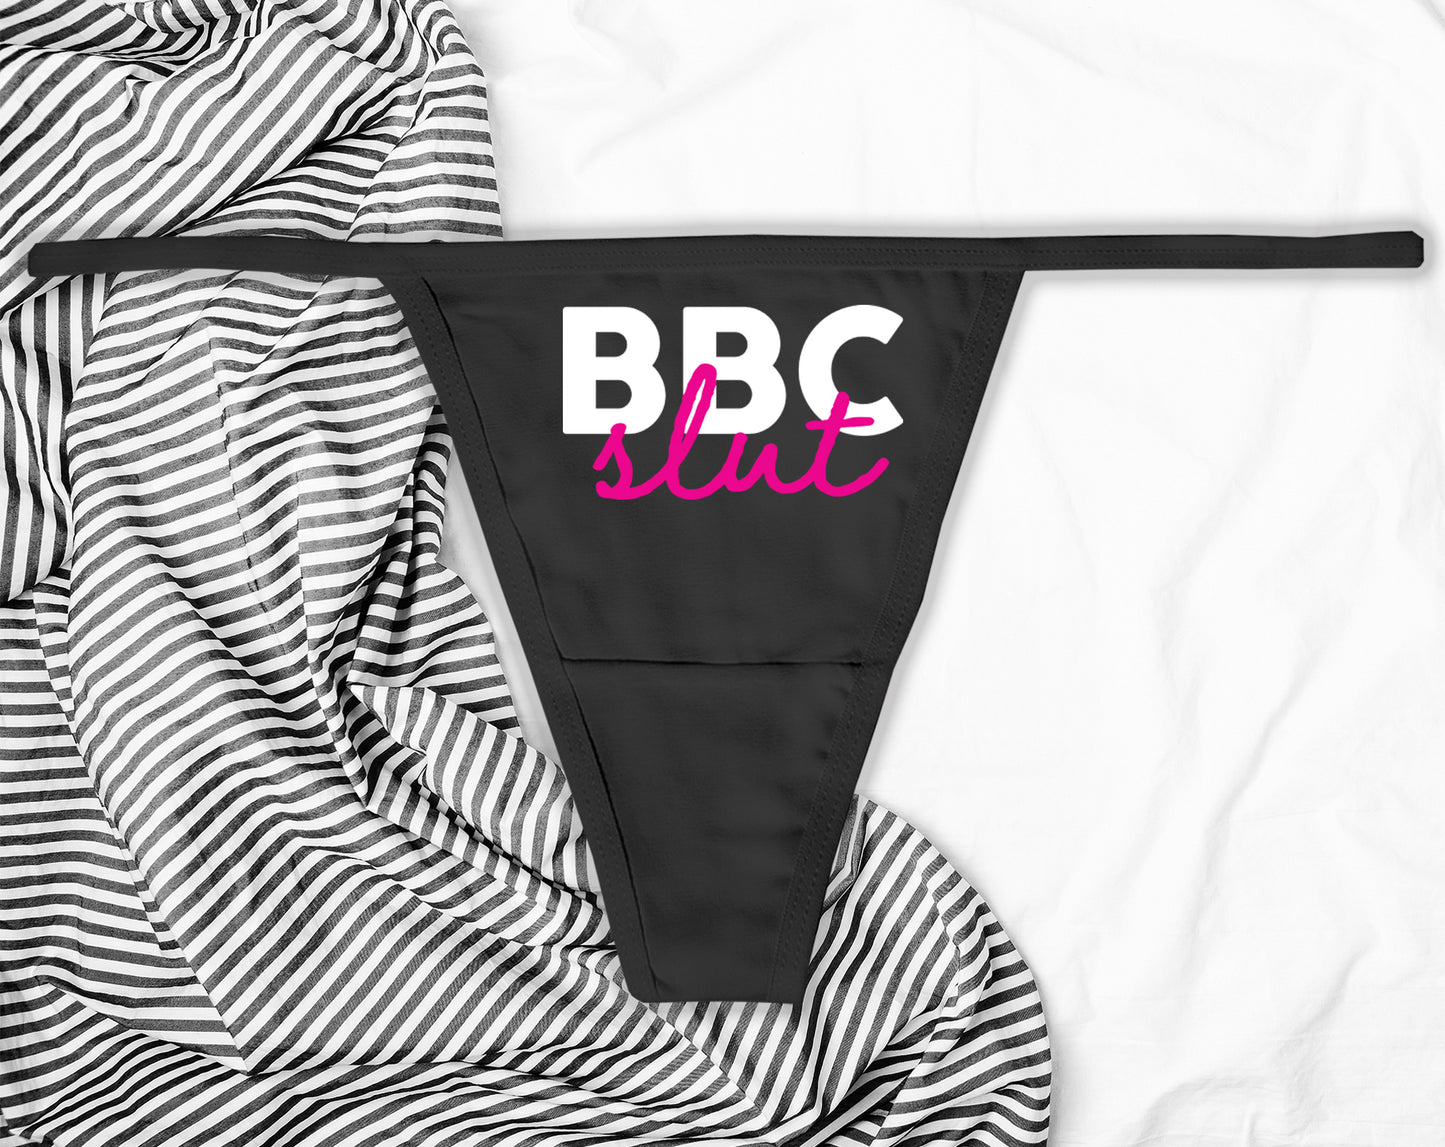 BBC Slut Thong